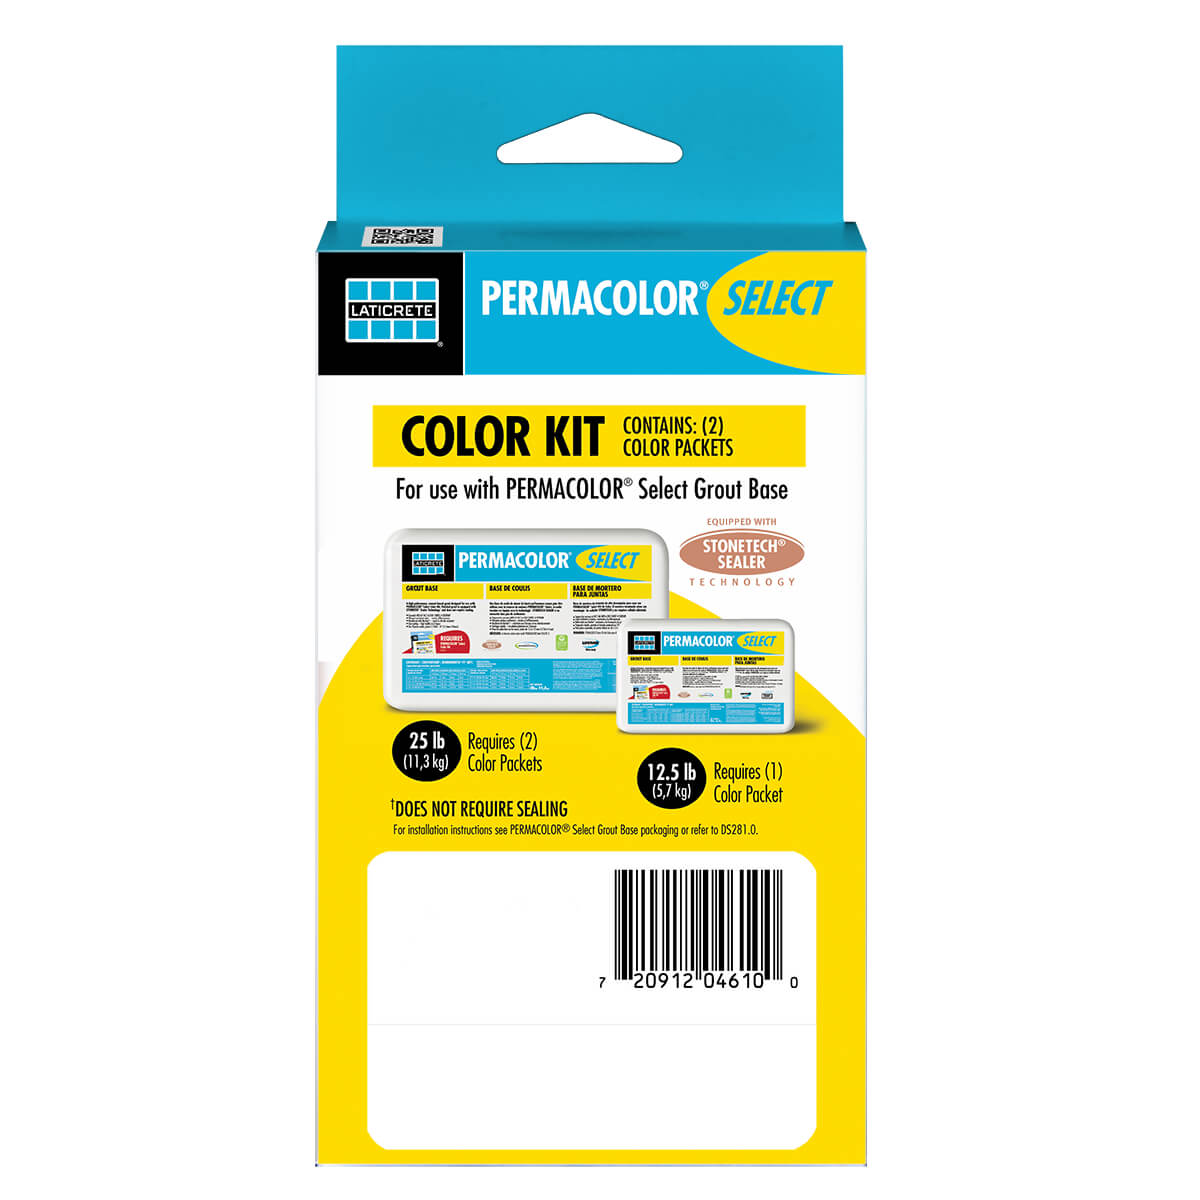 Laticrete PERMACOLOR Select Pigment Color Pack